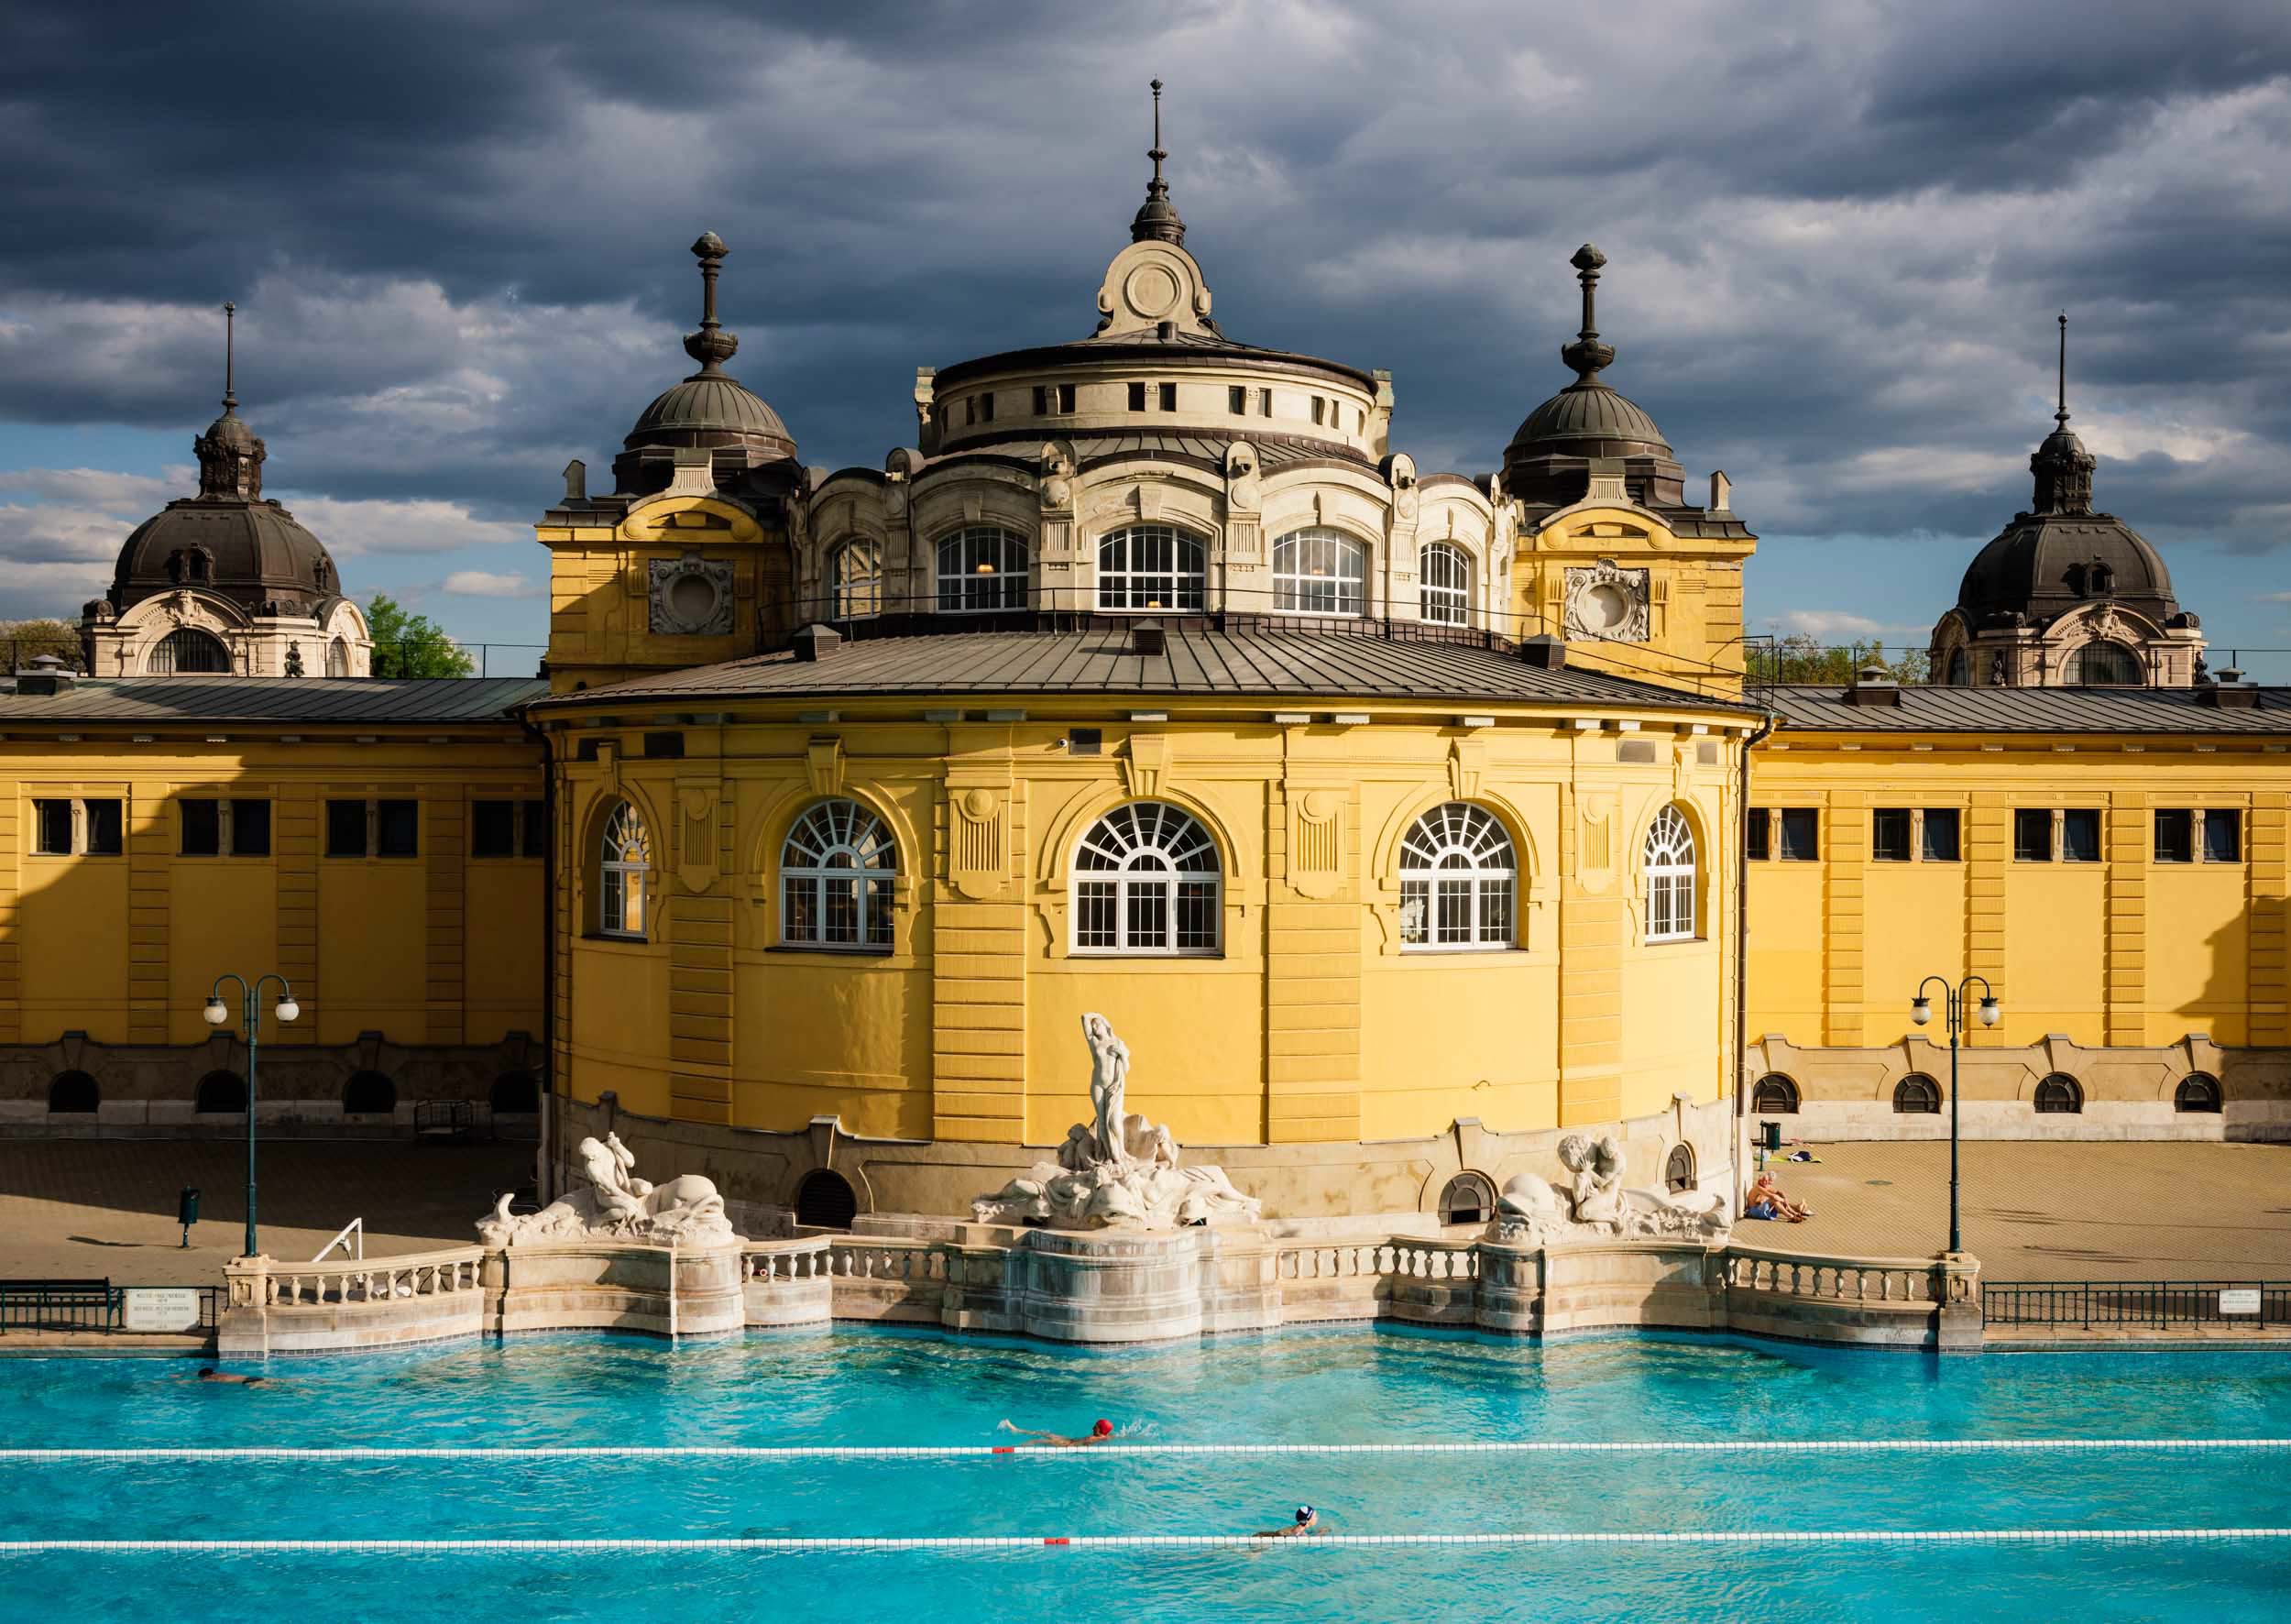 szechenyi-thermal-baths-budapest-hungary-travel-destinations